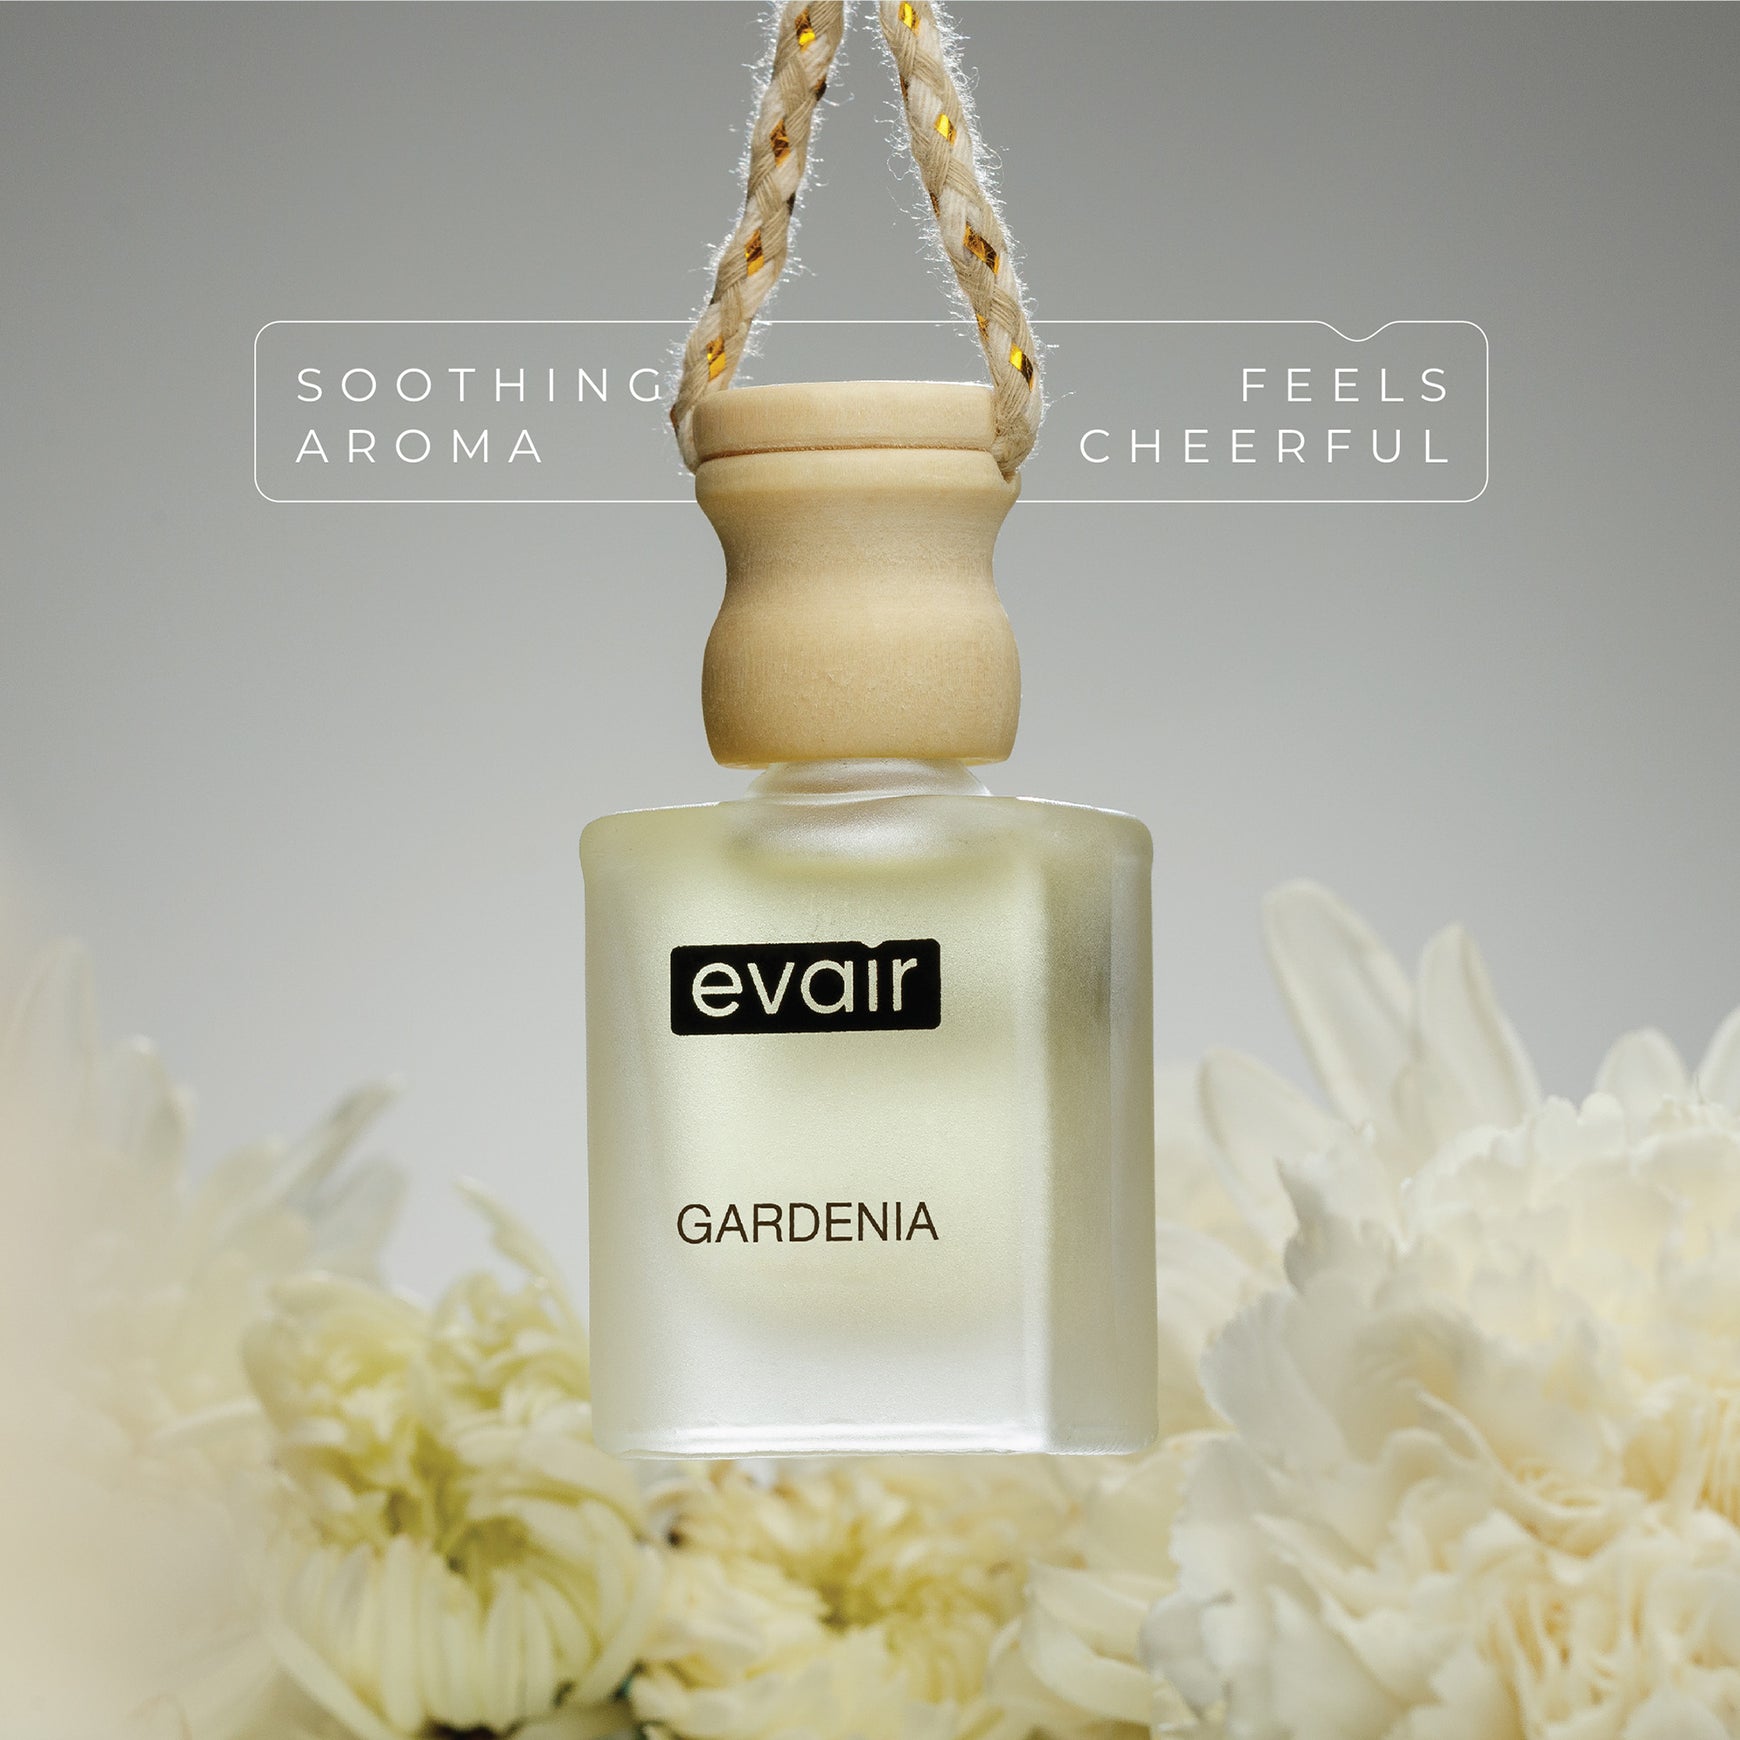 Car Perfume Gold - Air Freshener in Glass Bottle - Luxury Odor Eliminator -  Unique Fragrance & Long-Lasting Aroma for Vehicle, Office, Home -Inspired